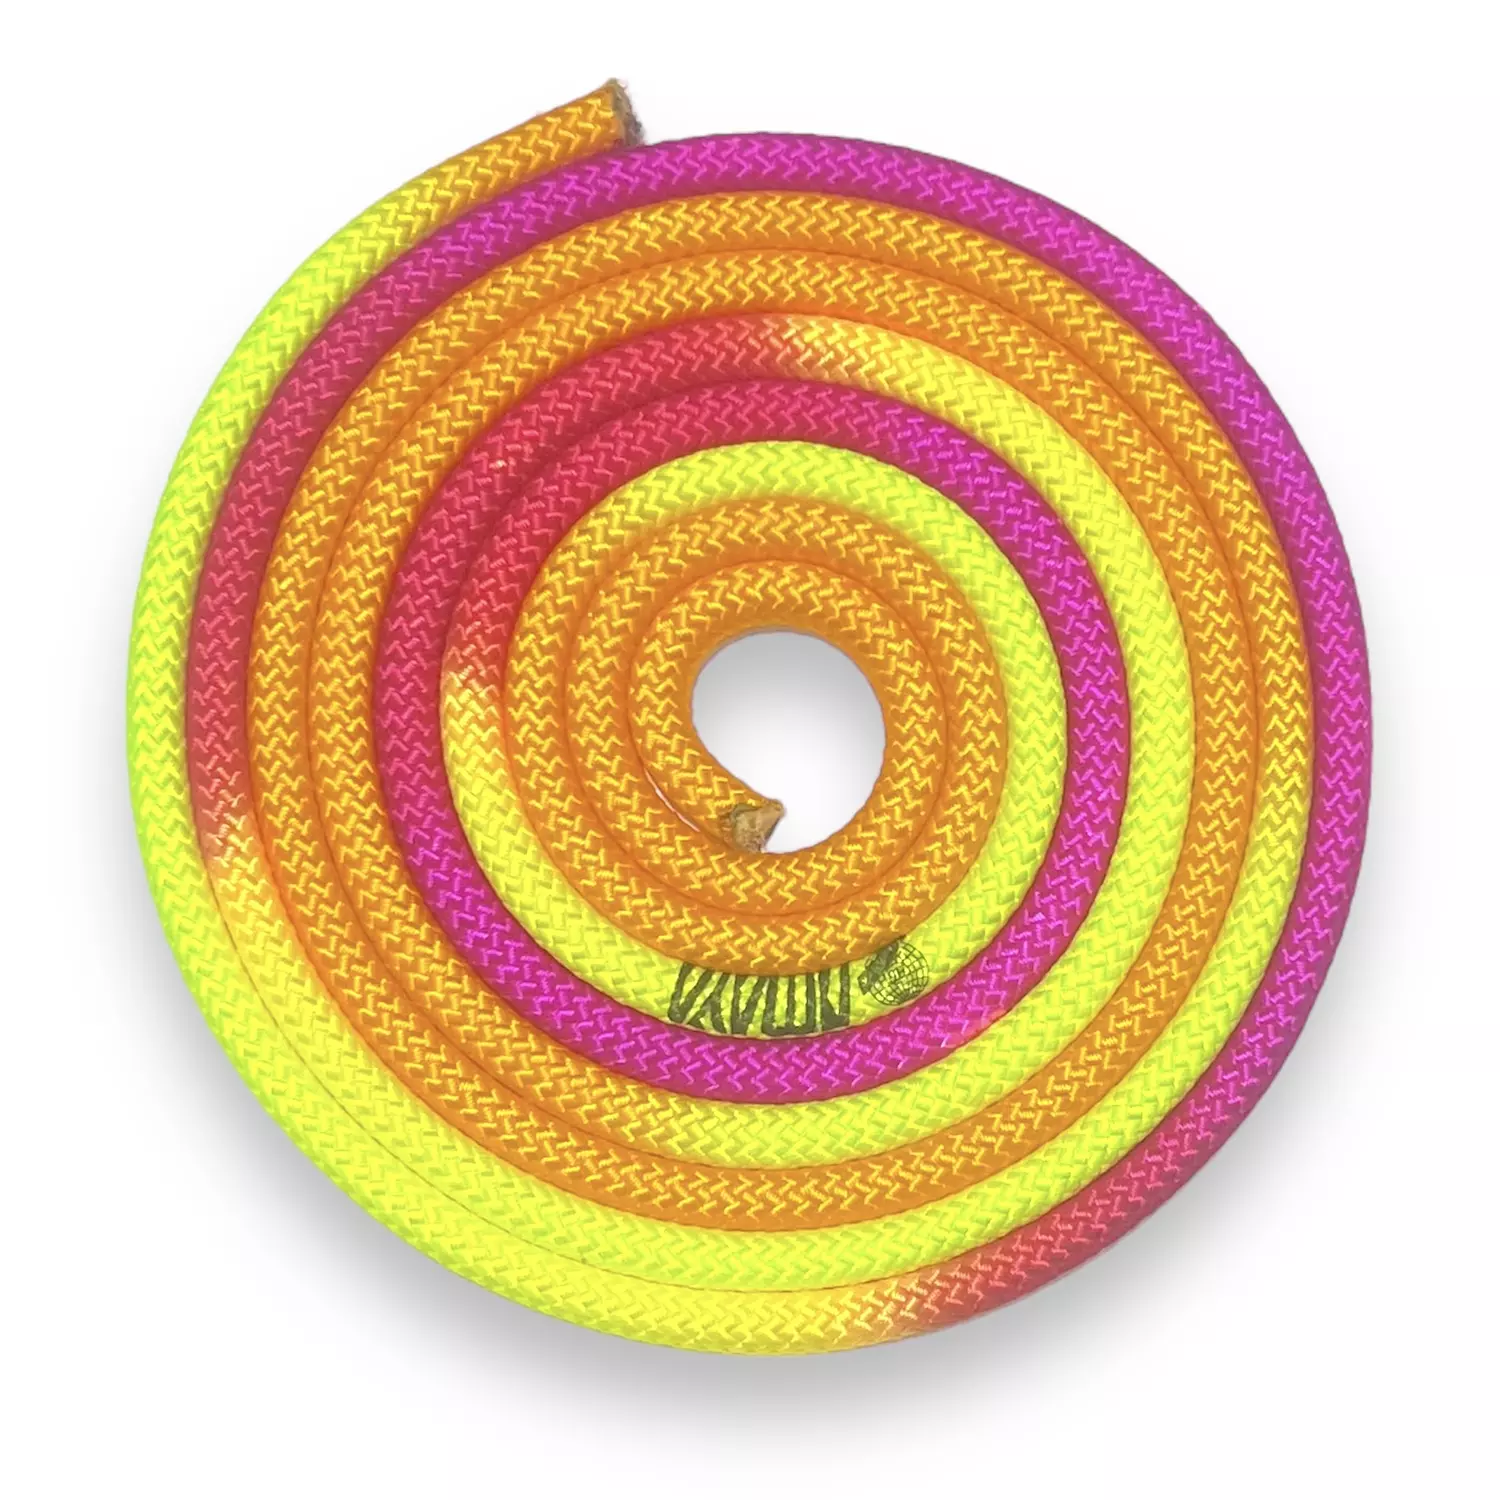 Amaya-Multicolor Rope FIG 3m 0